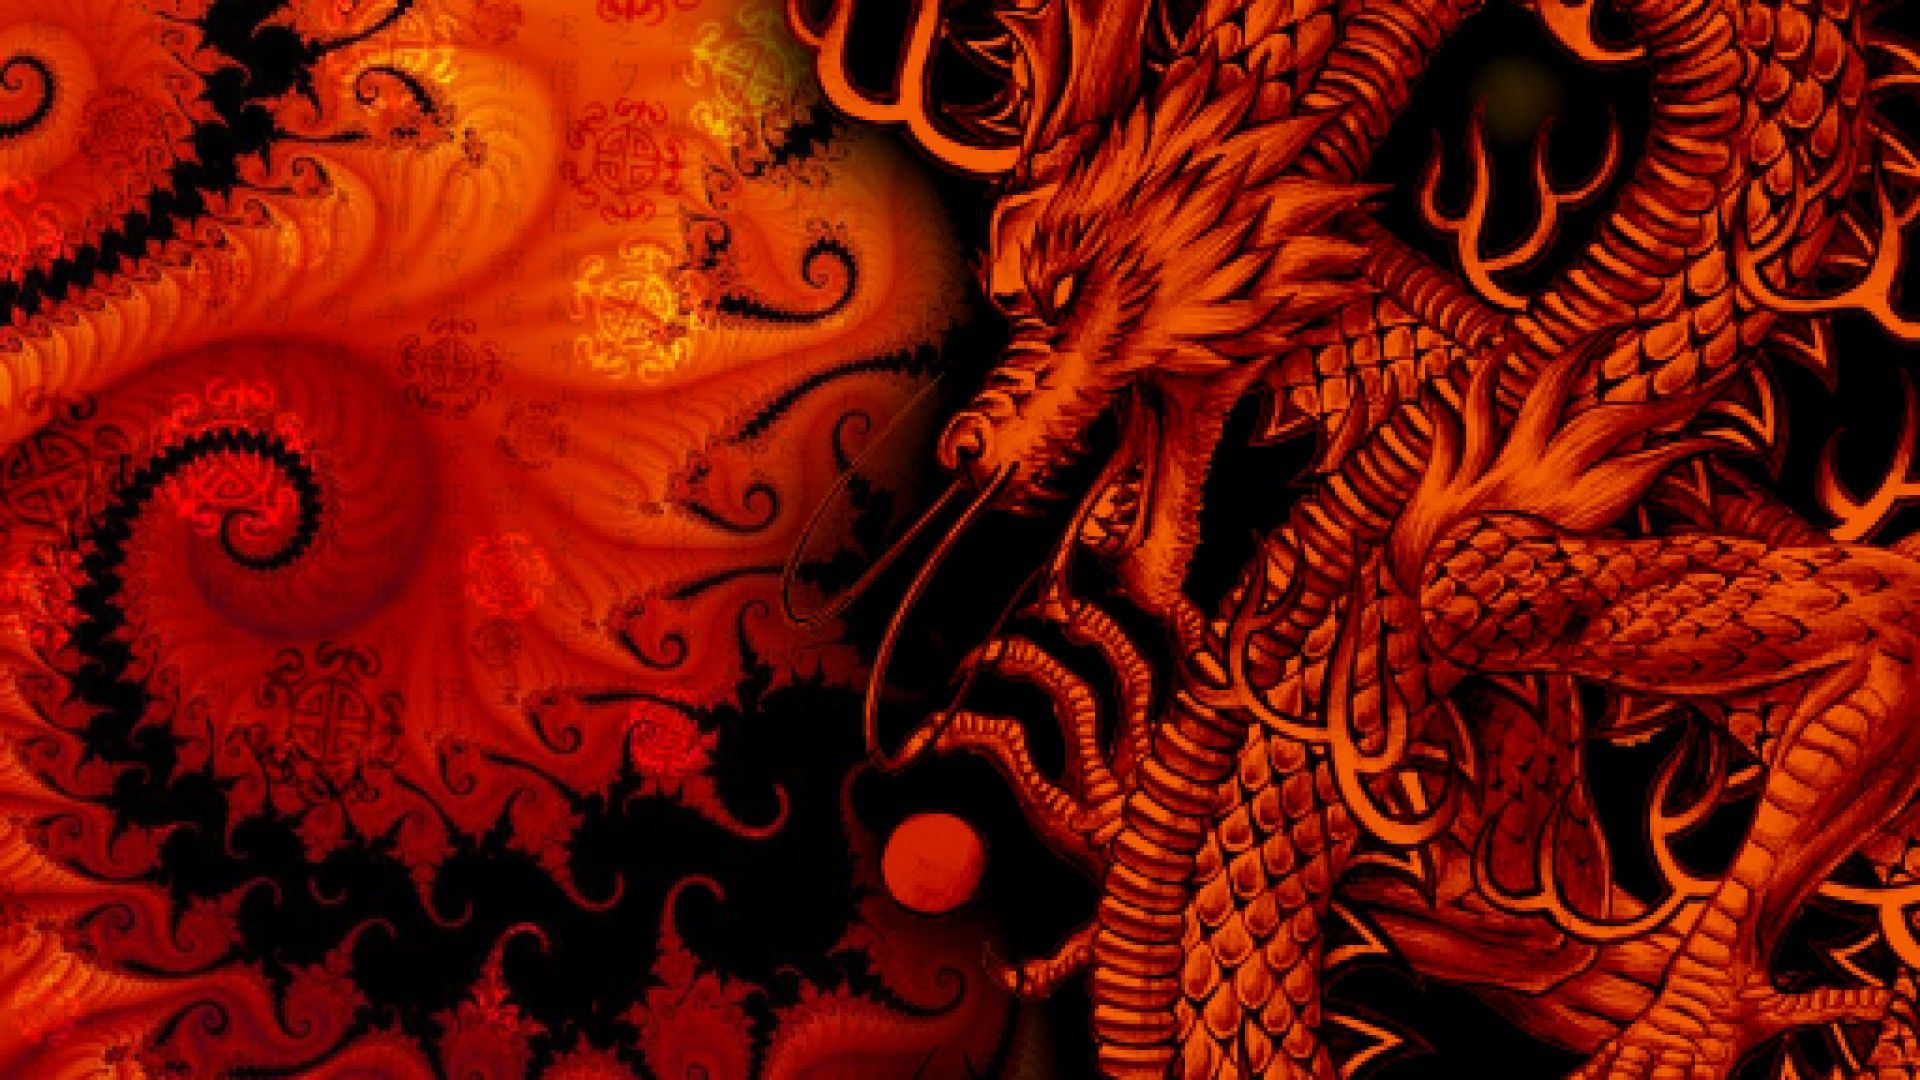 Dragon Wallpapers 1080p - Wallpaper Cave